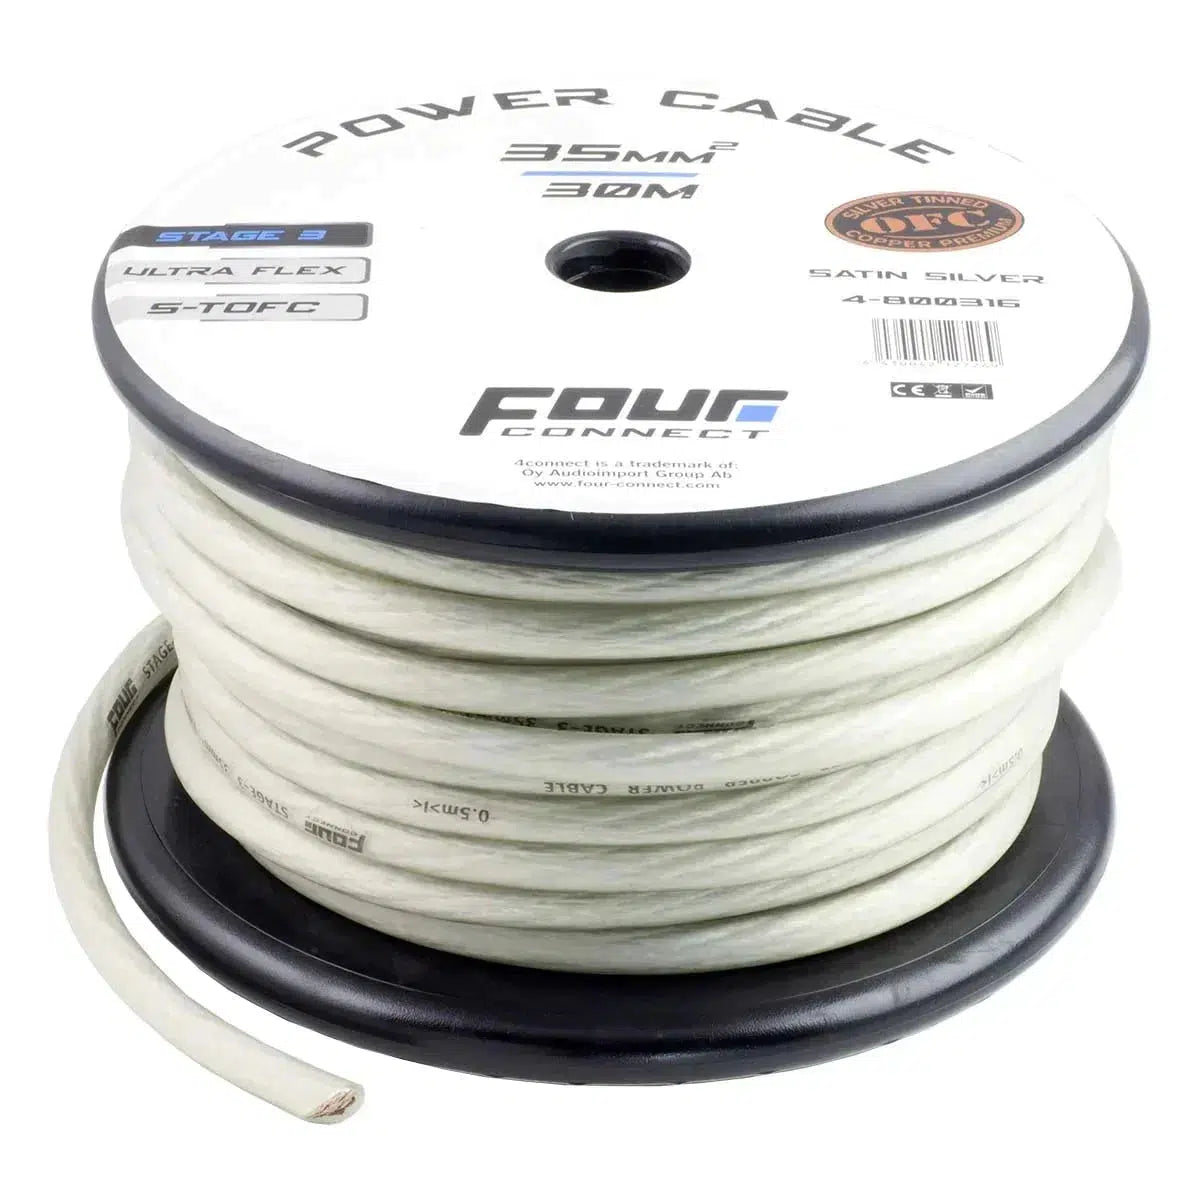 Four Connect-Stage3 35mm² S-TOFC Ultra-Flex 30m-35mm² power cable-Masori.de